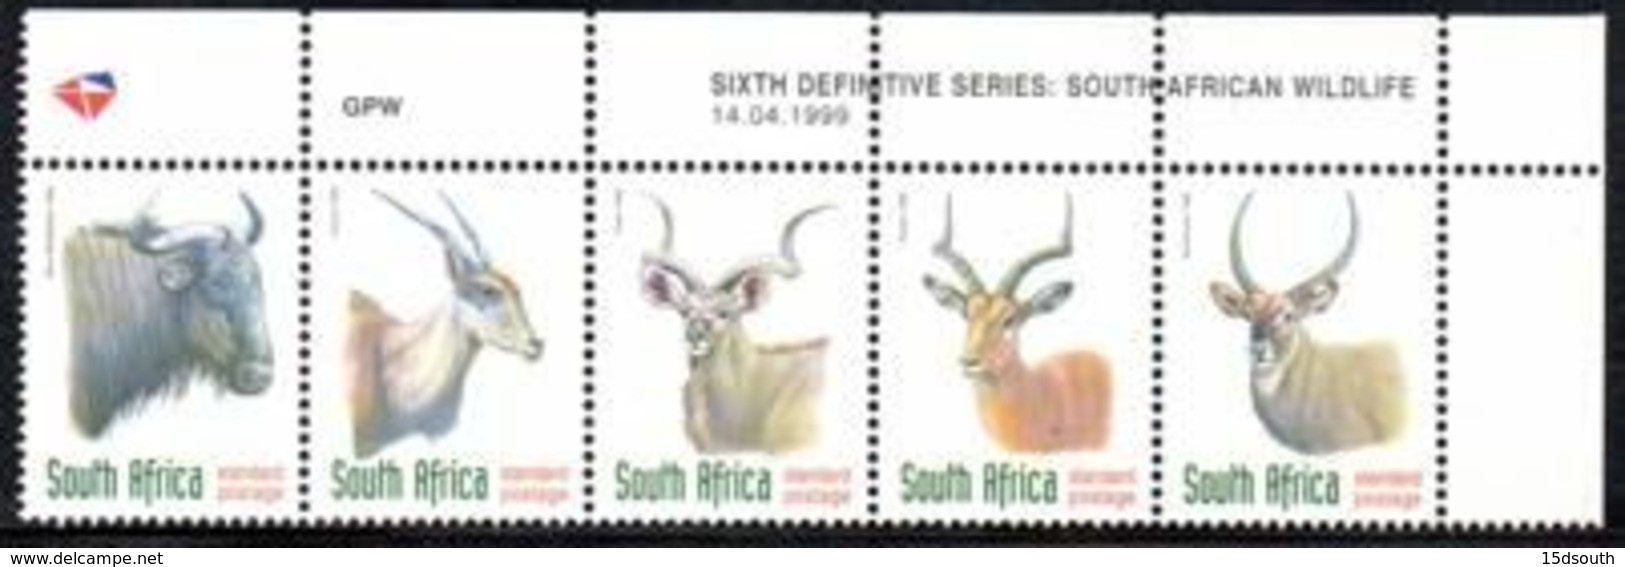 South Africa - 1999 Redrawn 6th Definitive SPR Antelopes Control Block (1999.04.14) (**) - Blokken & Velletjes